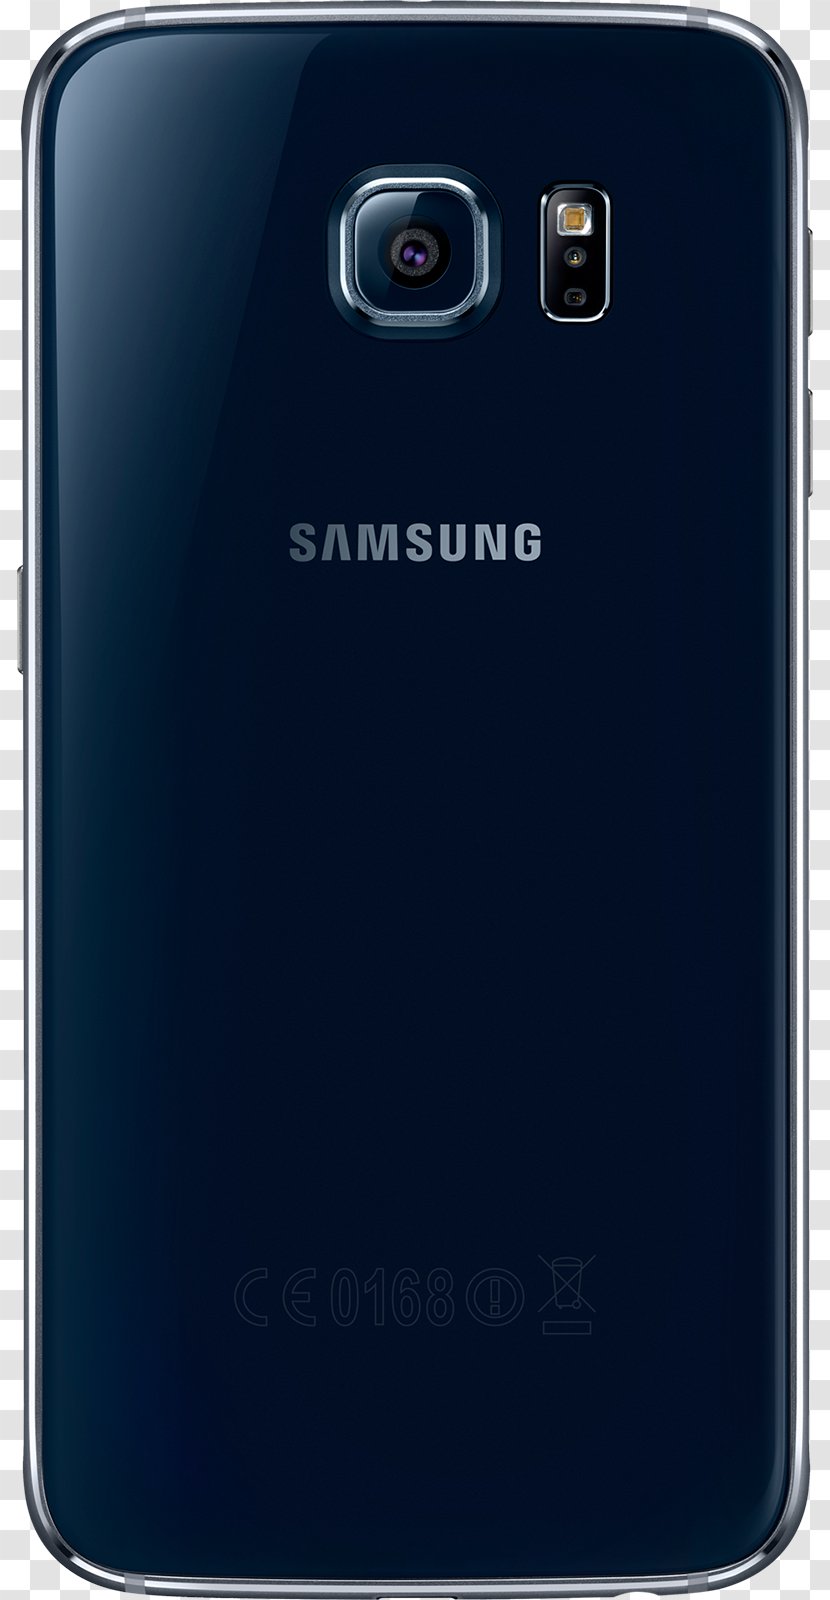 Samsung Galaxy S6 Edge Telephone Black Sapphire Smartphone - Telephony - S6edga Transparent PNG